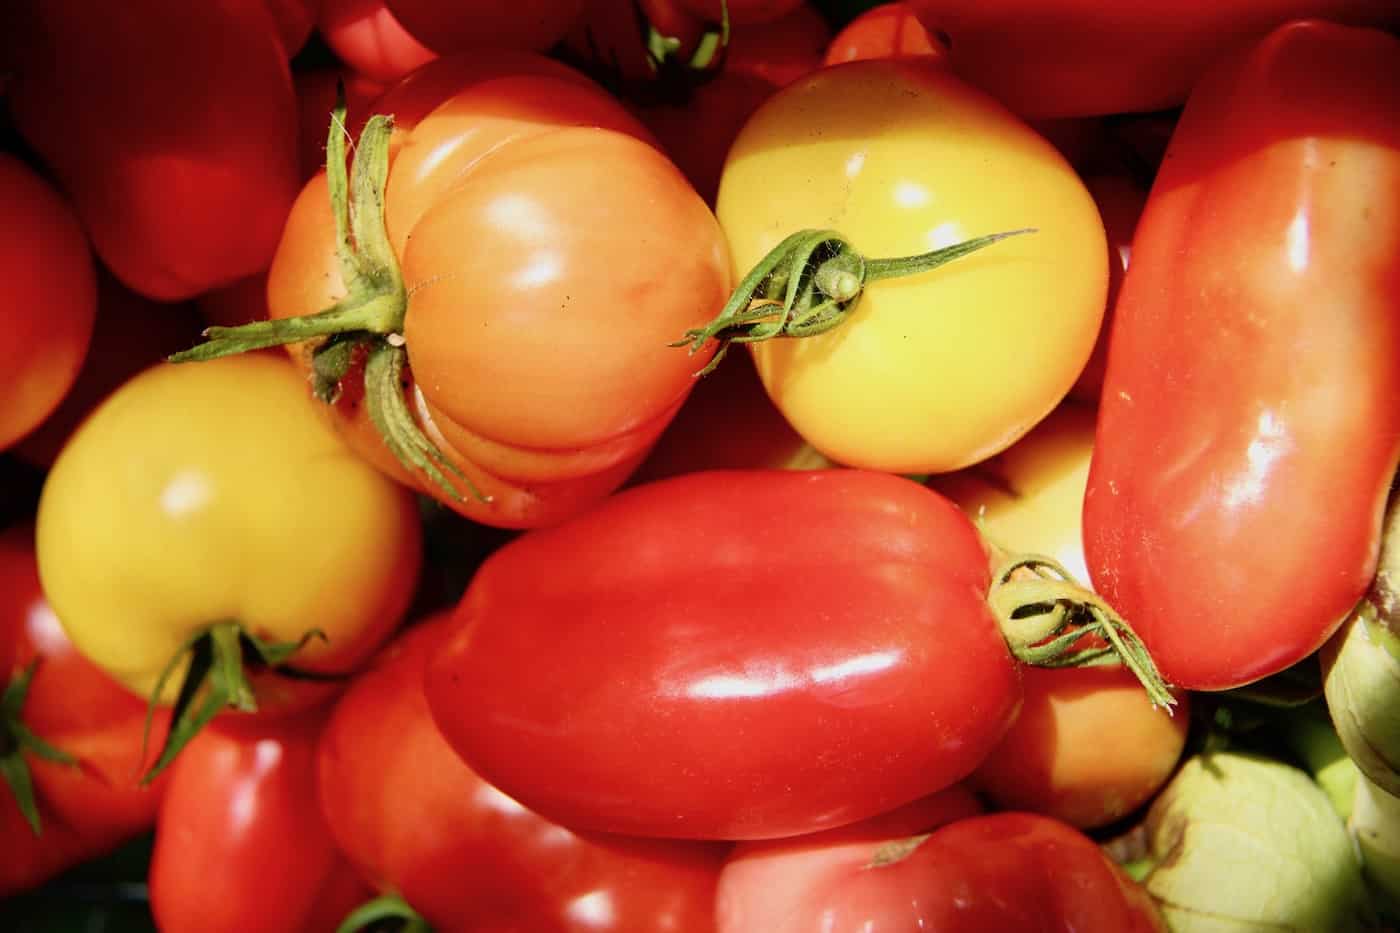 Harvesting homegrown heirloom tomatoes